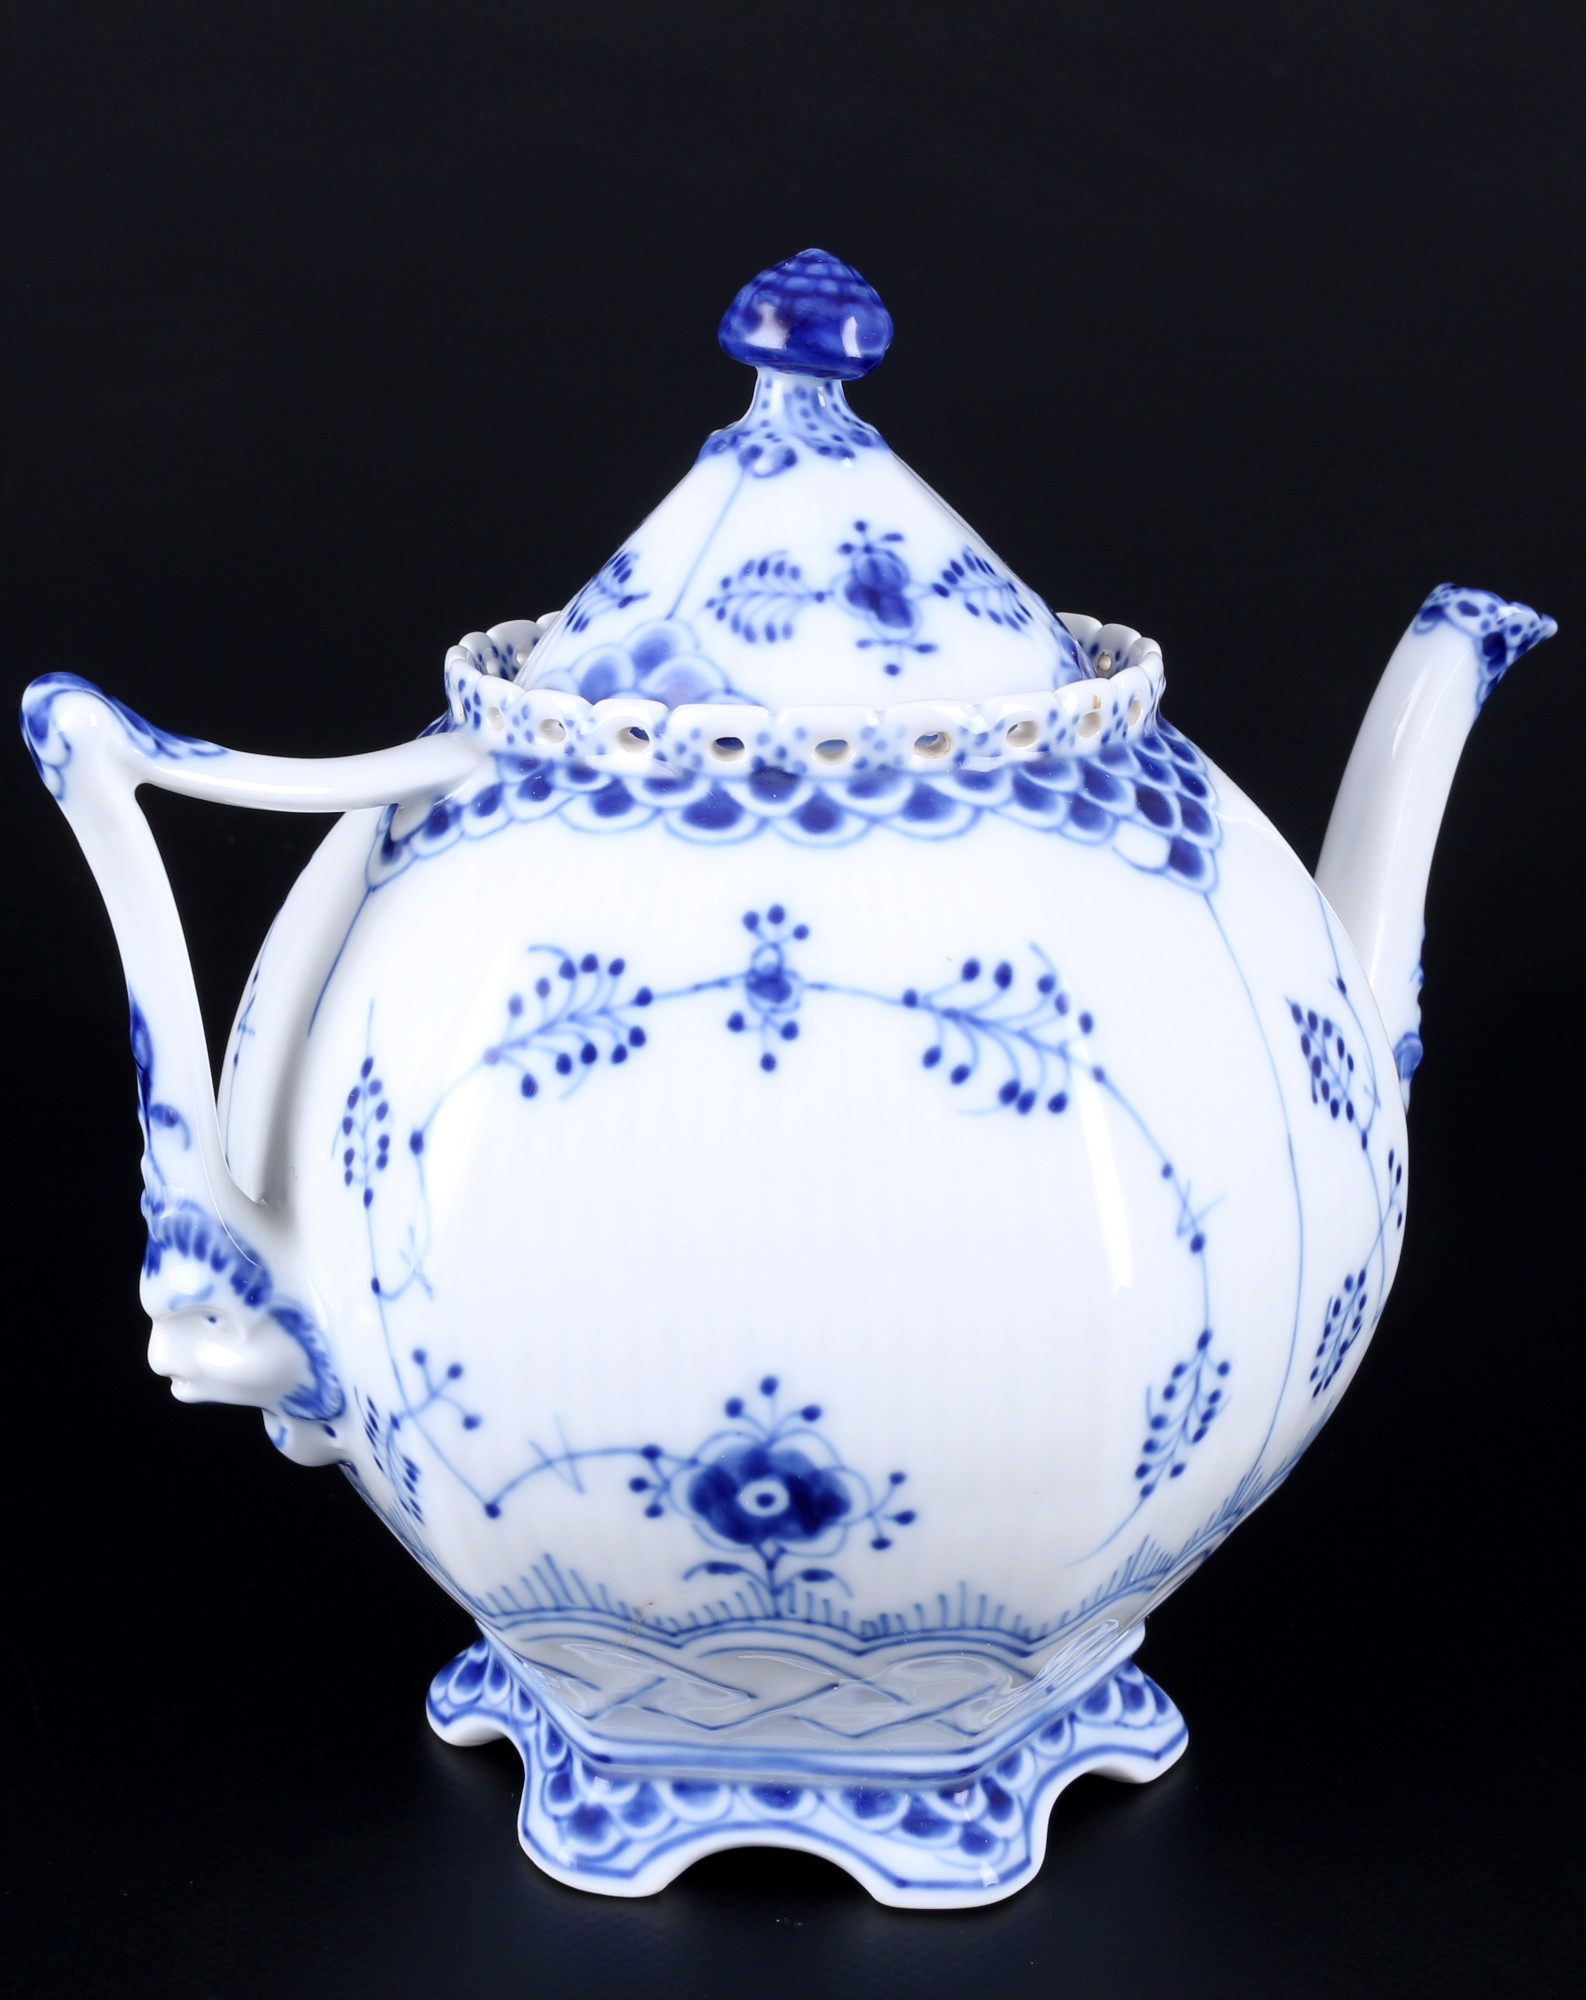 Royal Copenhagen Musselmalet Full Lace tea pot 1118 1st choice, Vollspitze Teekanne, - Image 3 of 4